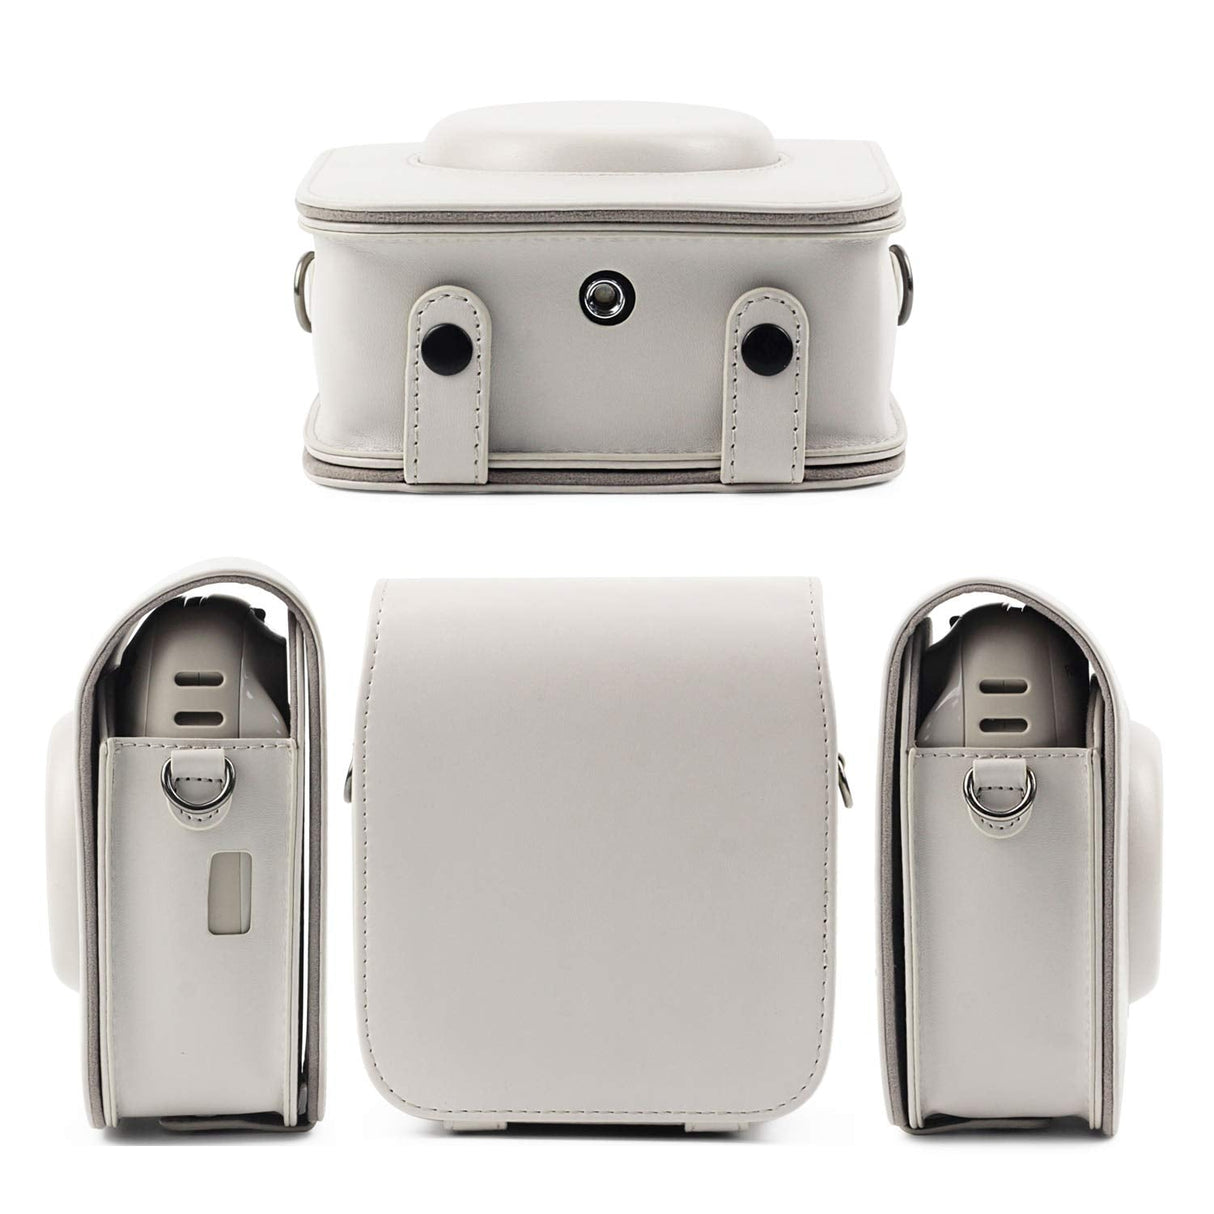 ZENKO Instax Mini SQ 20/10 Instant Camera PU Case Smokey White